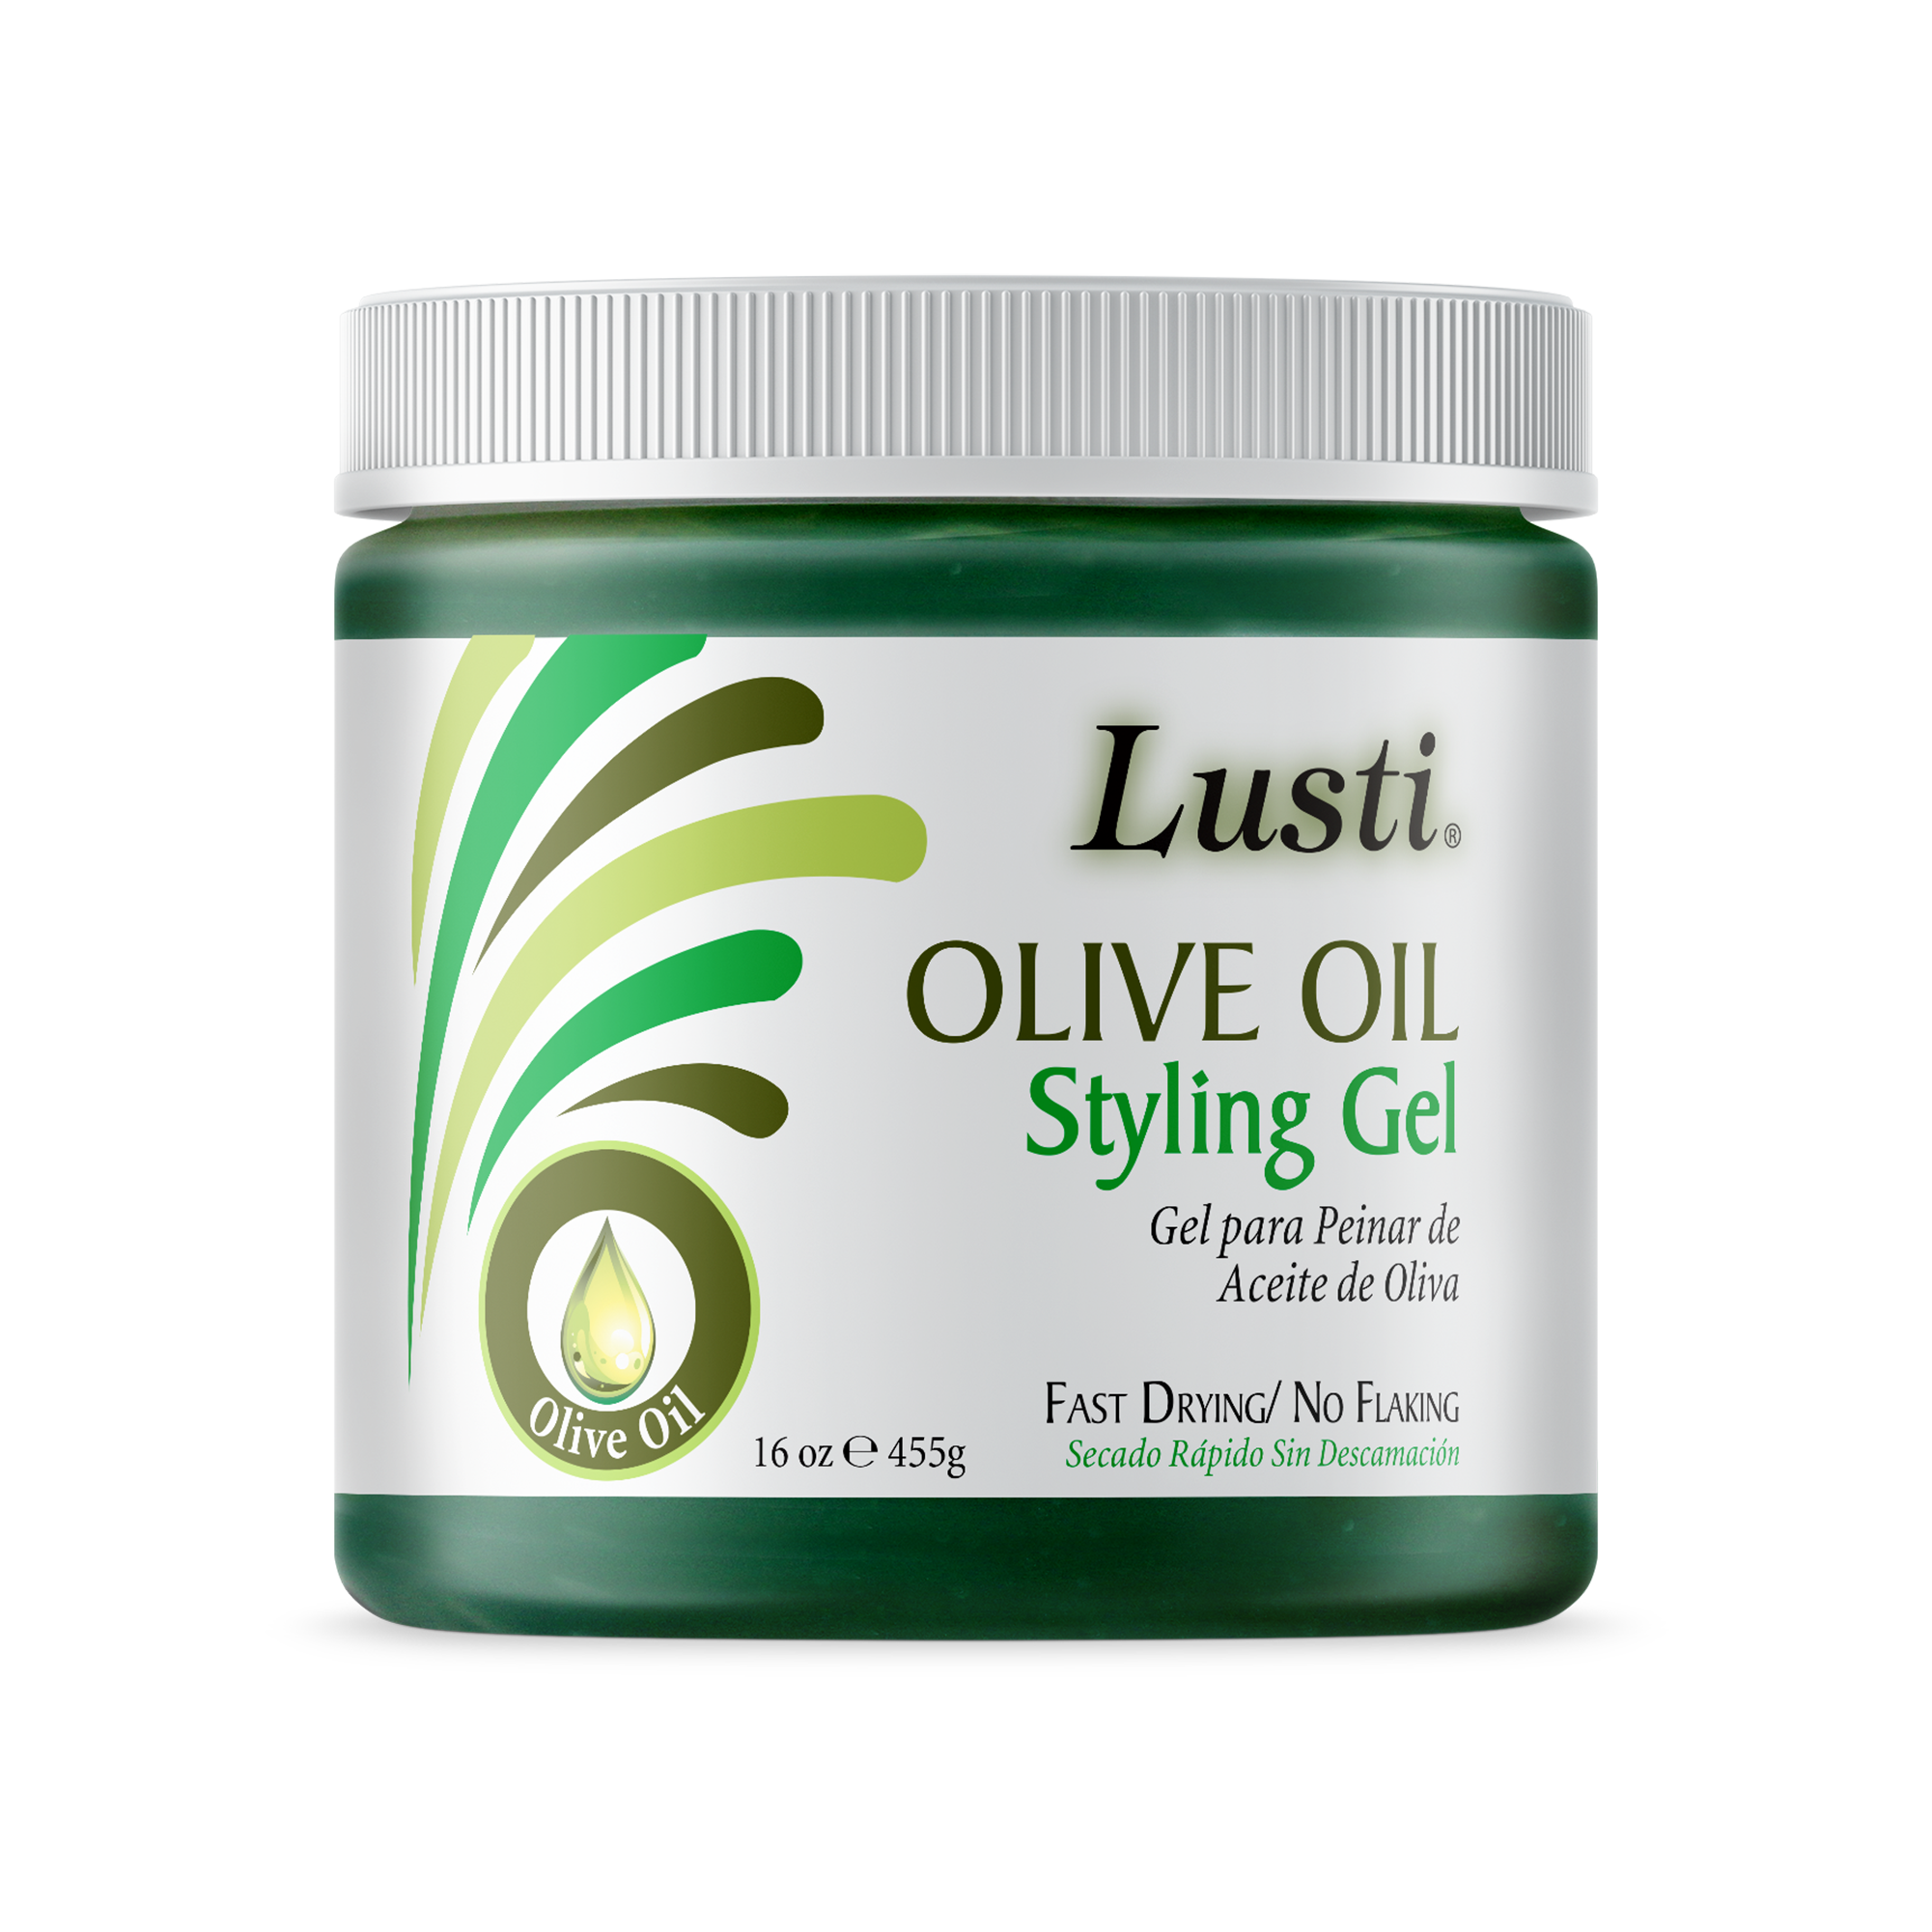 Lusti Olive Oil Styling Gel